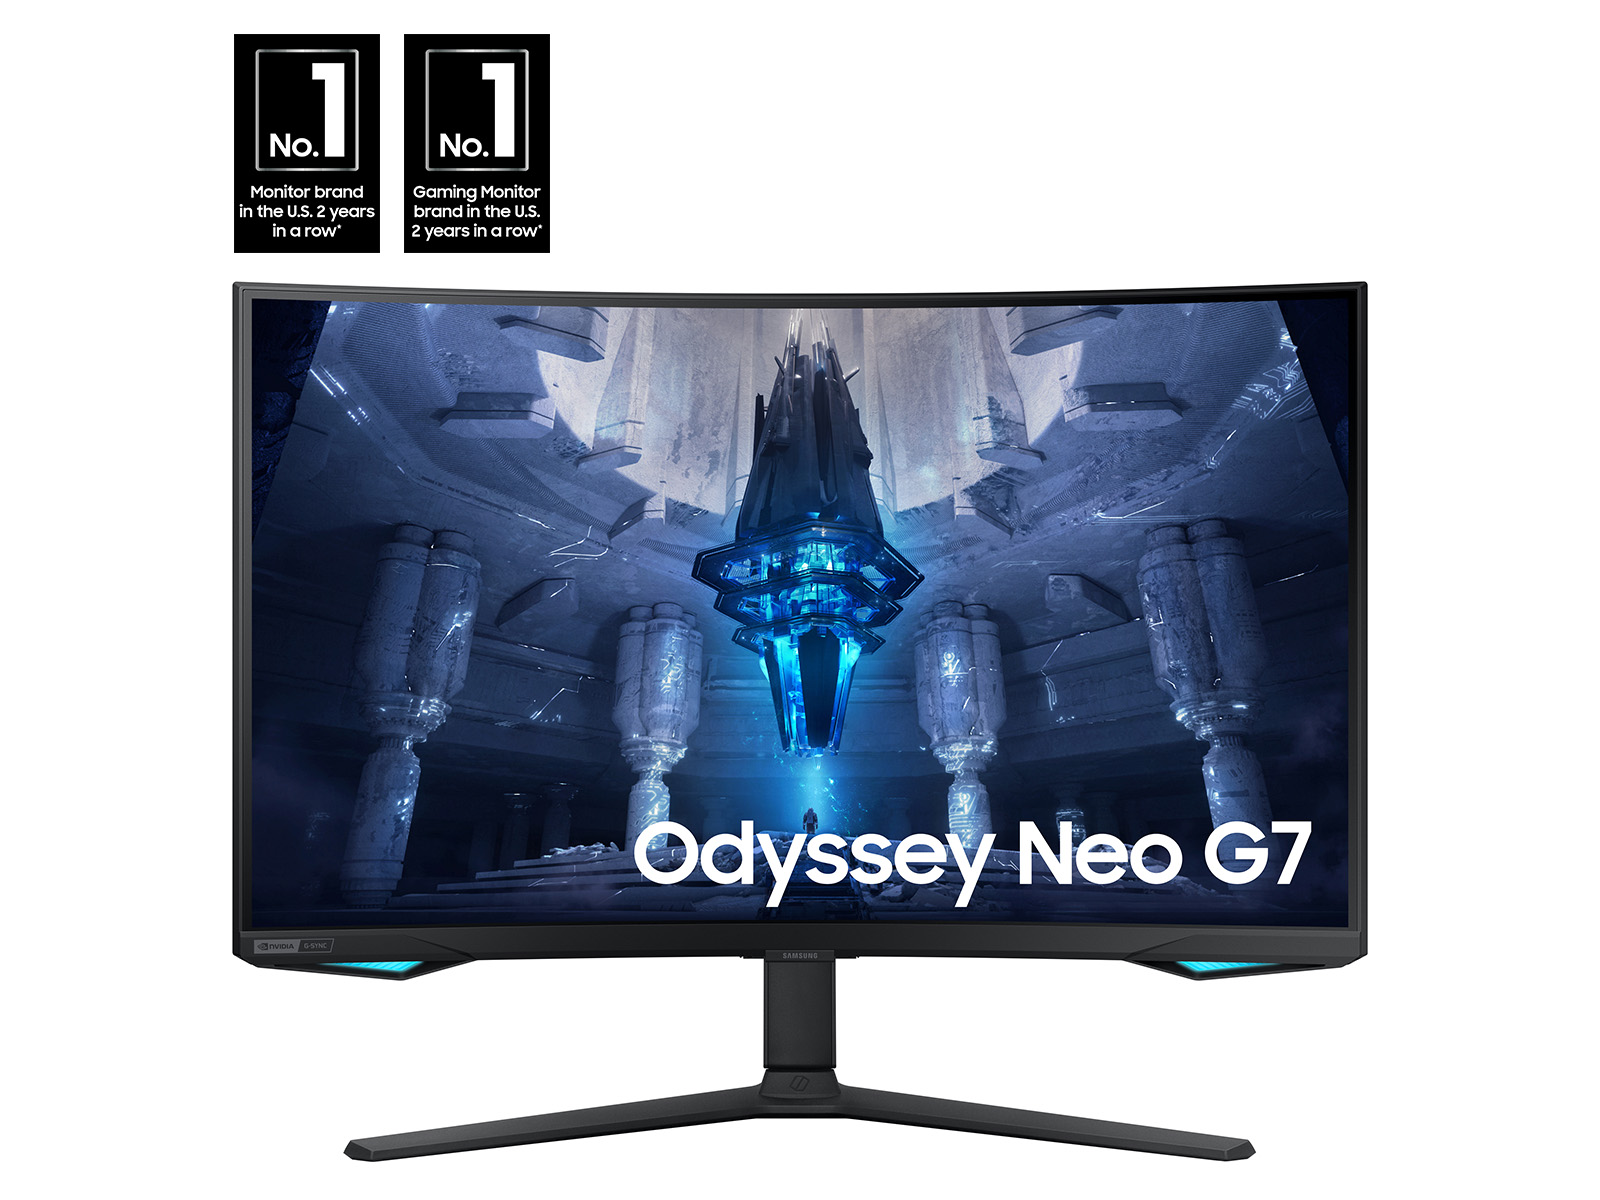 Photos - Monitor Samsung 32" Odyssey Neo G7 4K UHD 165Hz 1ms in black  Quantum HDR2000 (GTG)